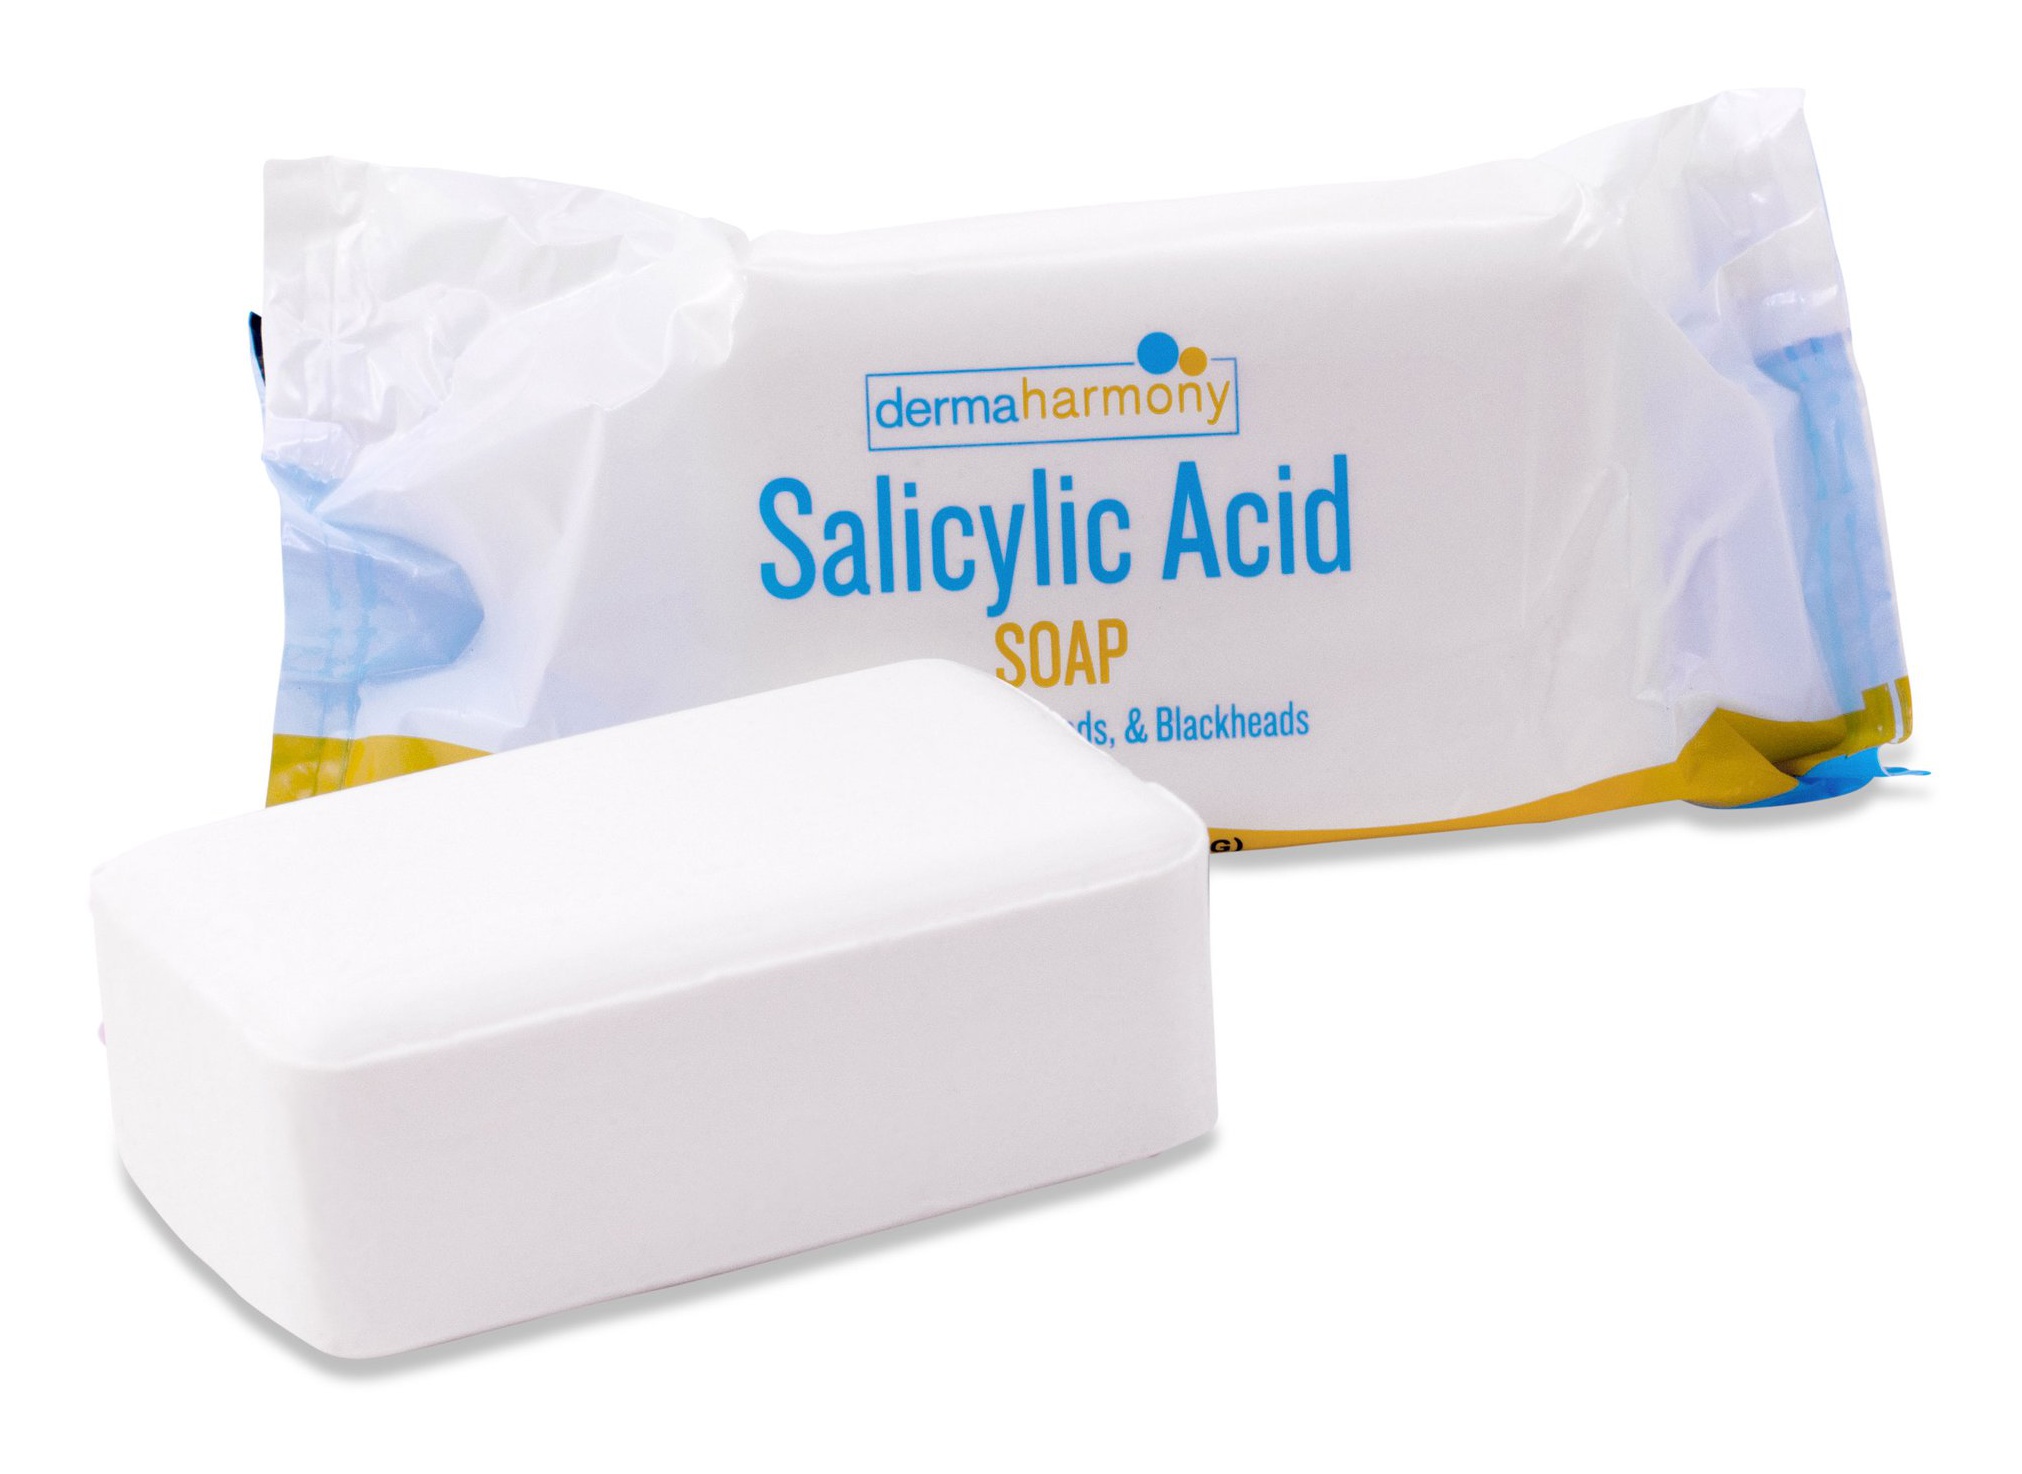 Dermaharmony 2% Salicylic Acid Soap